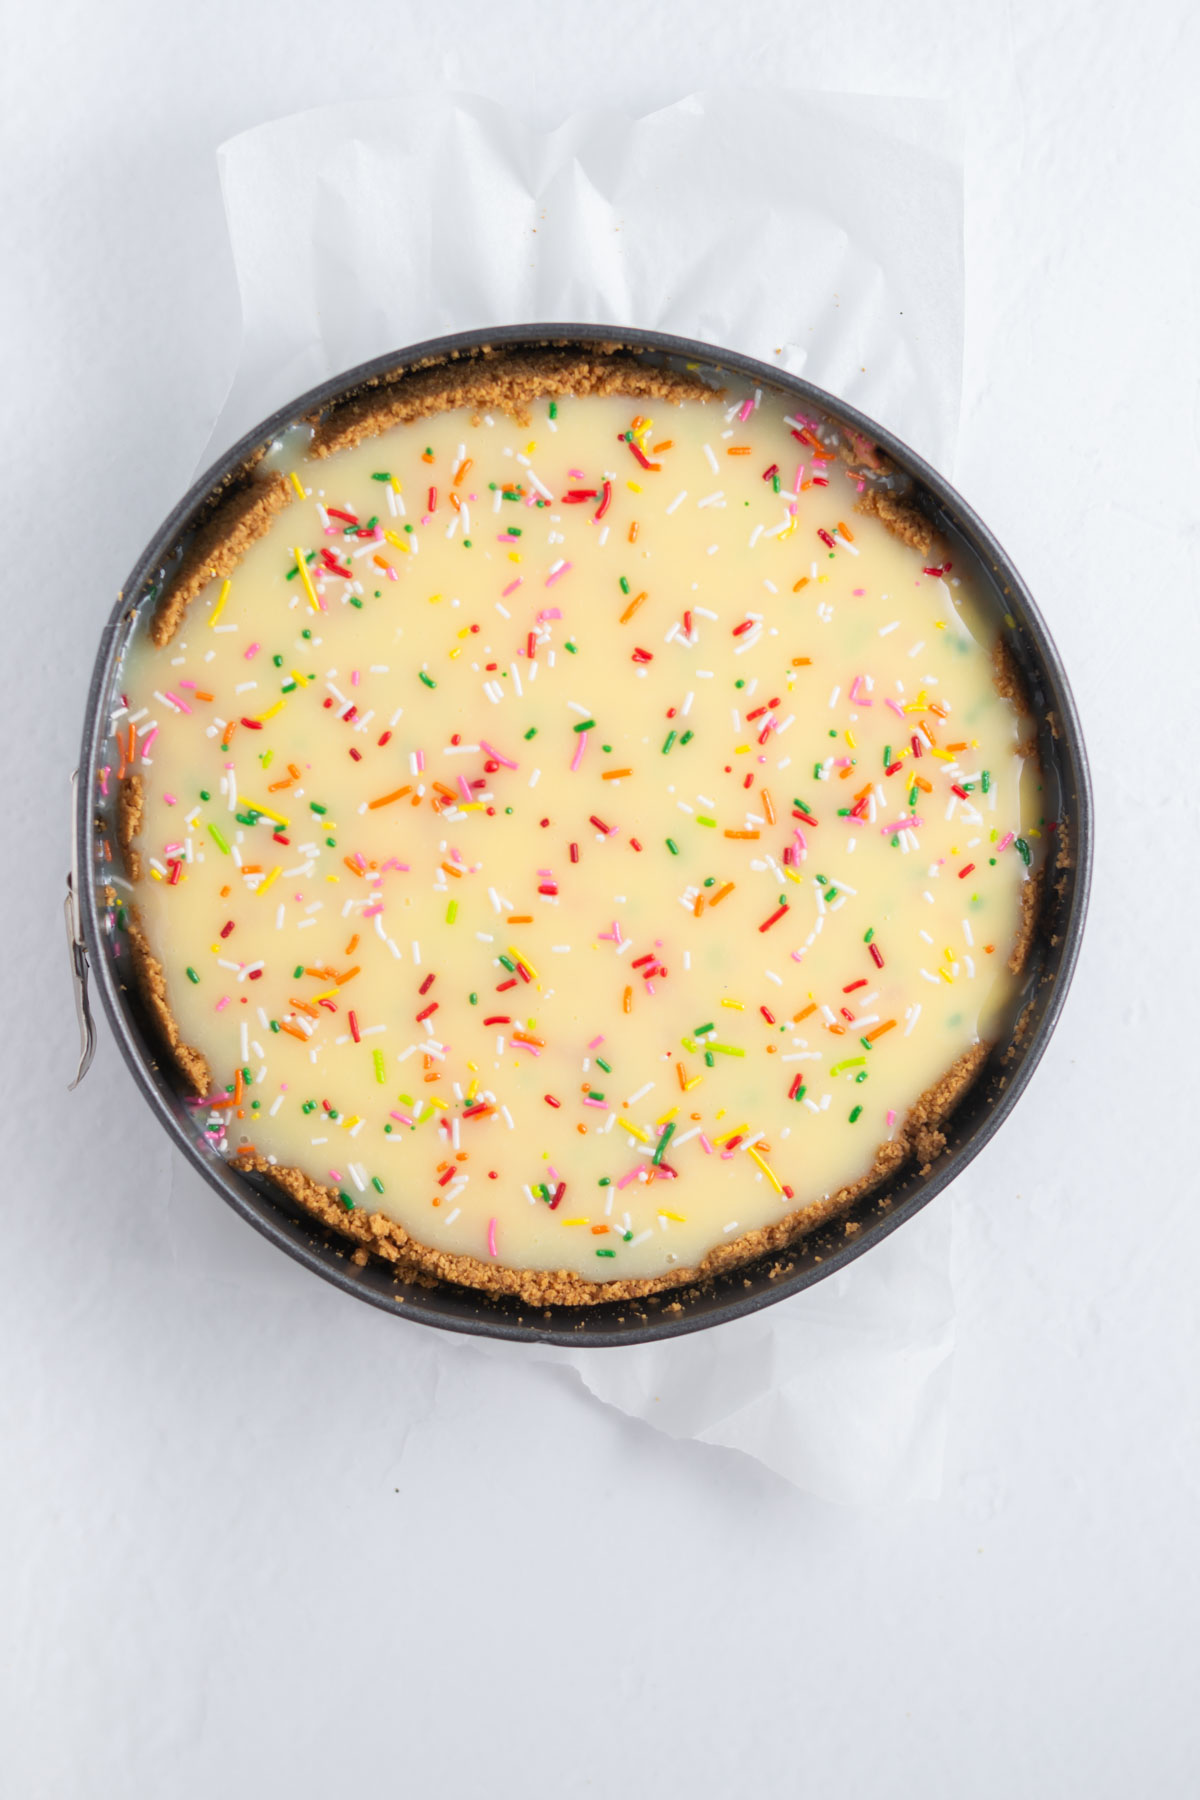 birthday cheesecake with white chocolate ganache and sprinkles